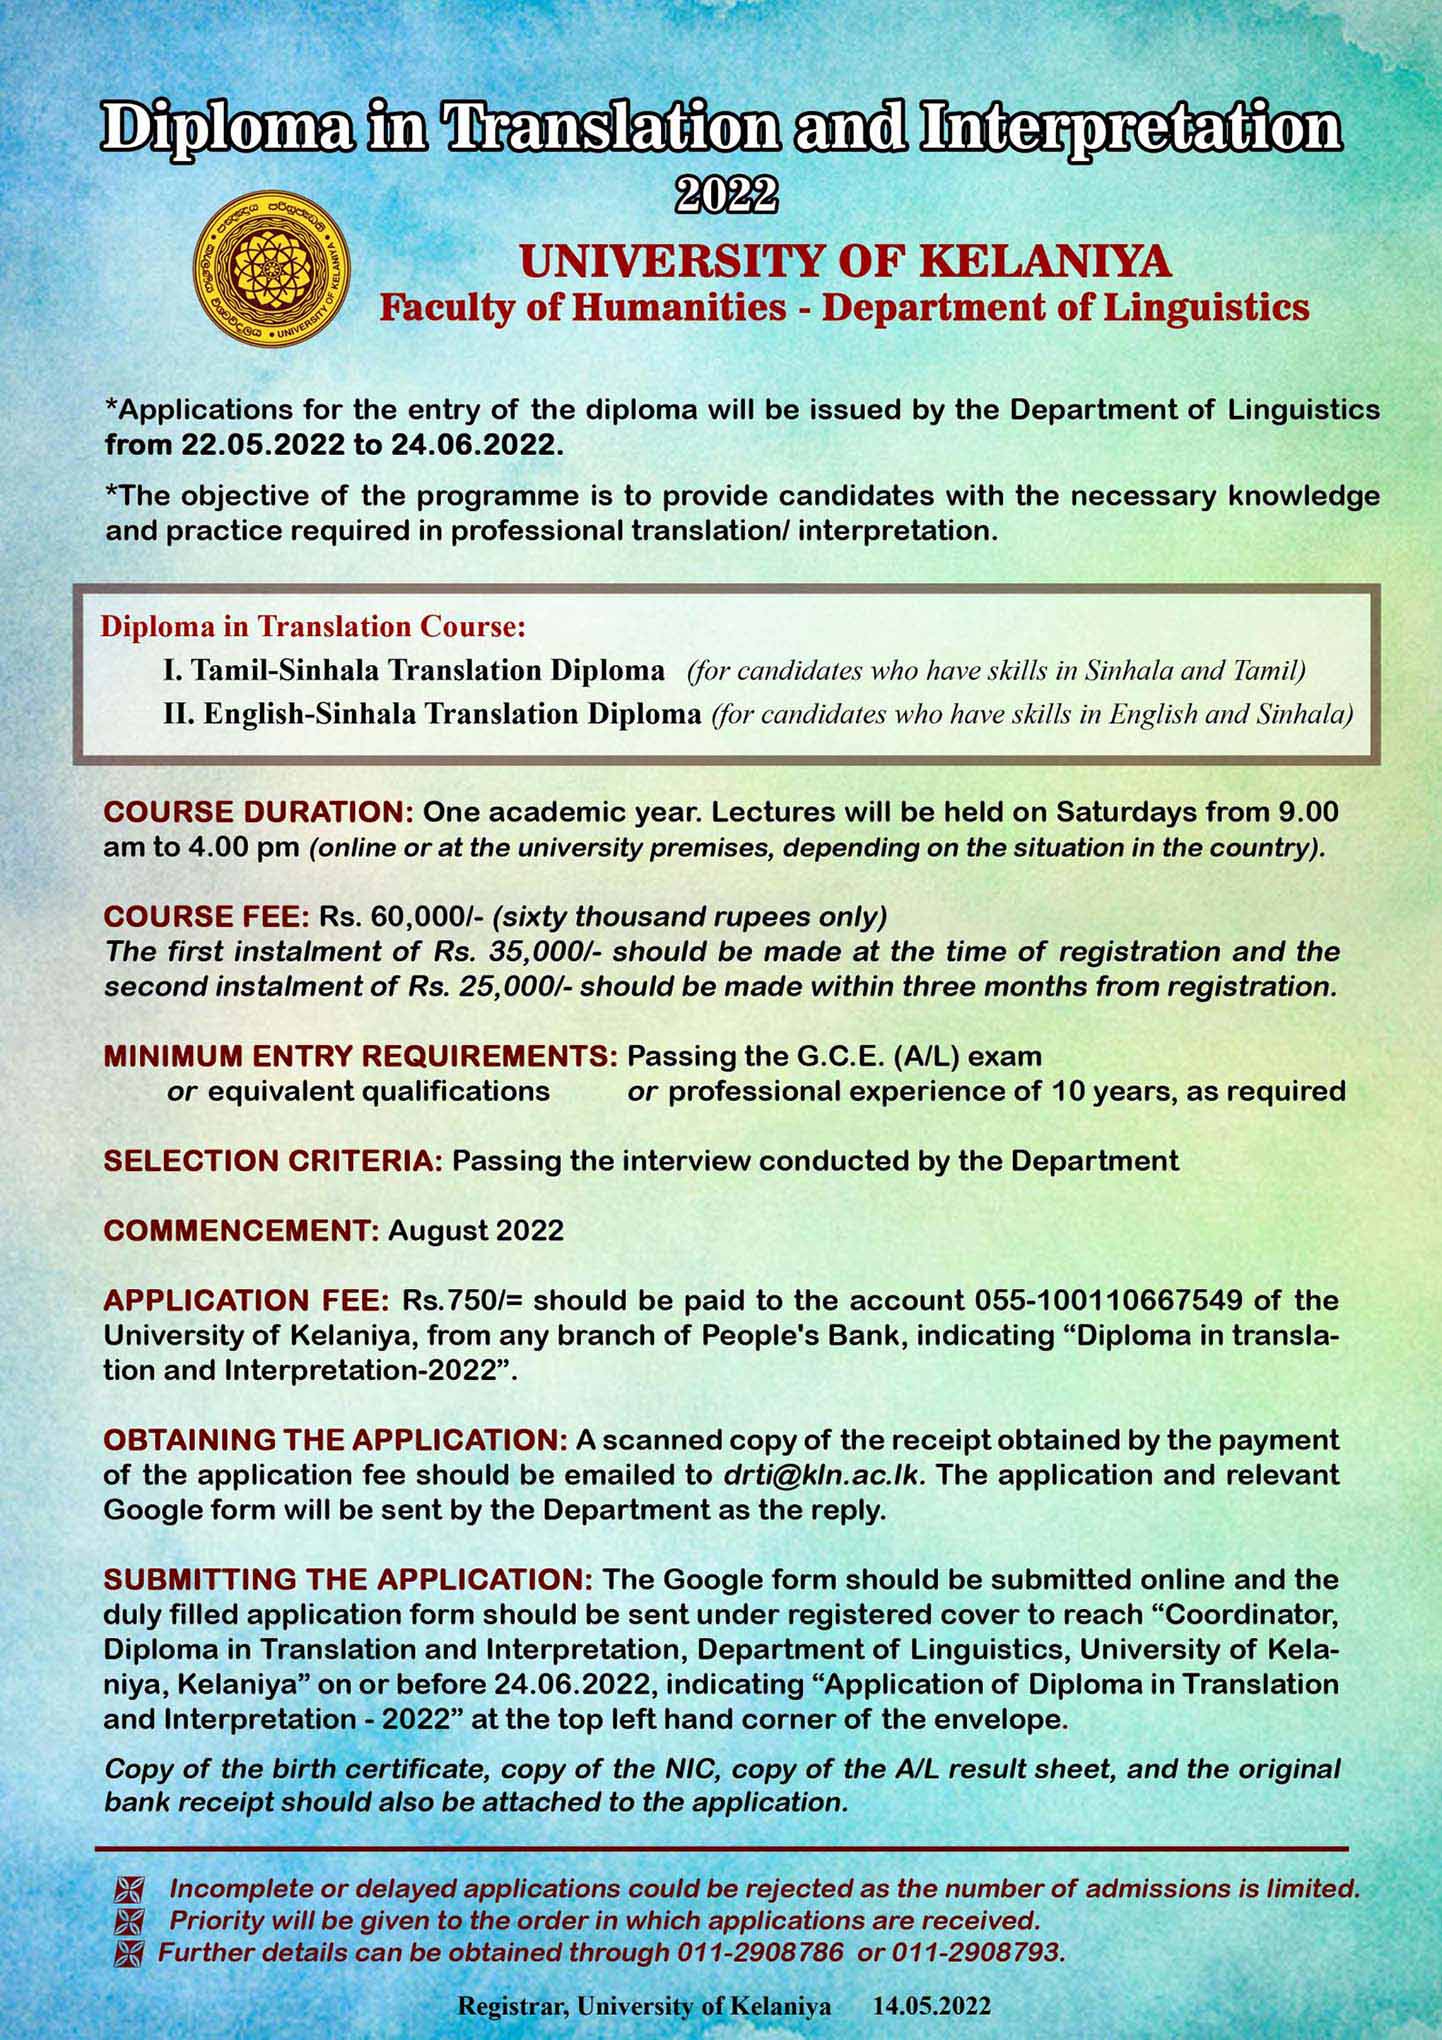 Diploma in Translation and Interpretation 2022 - University of Kelaniya